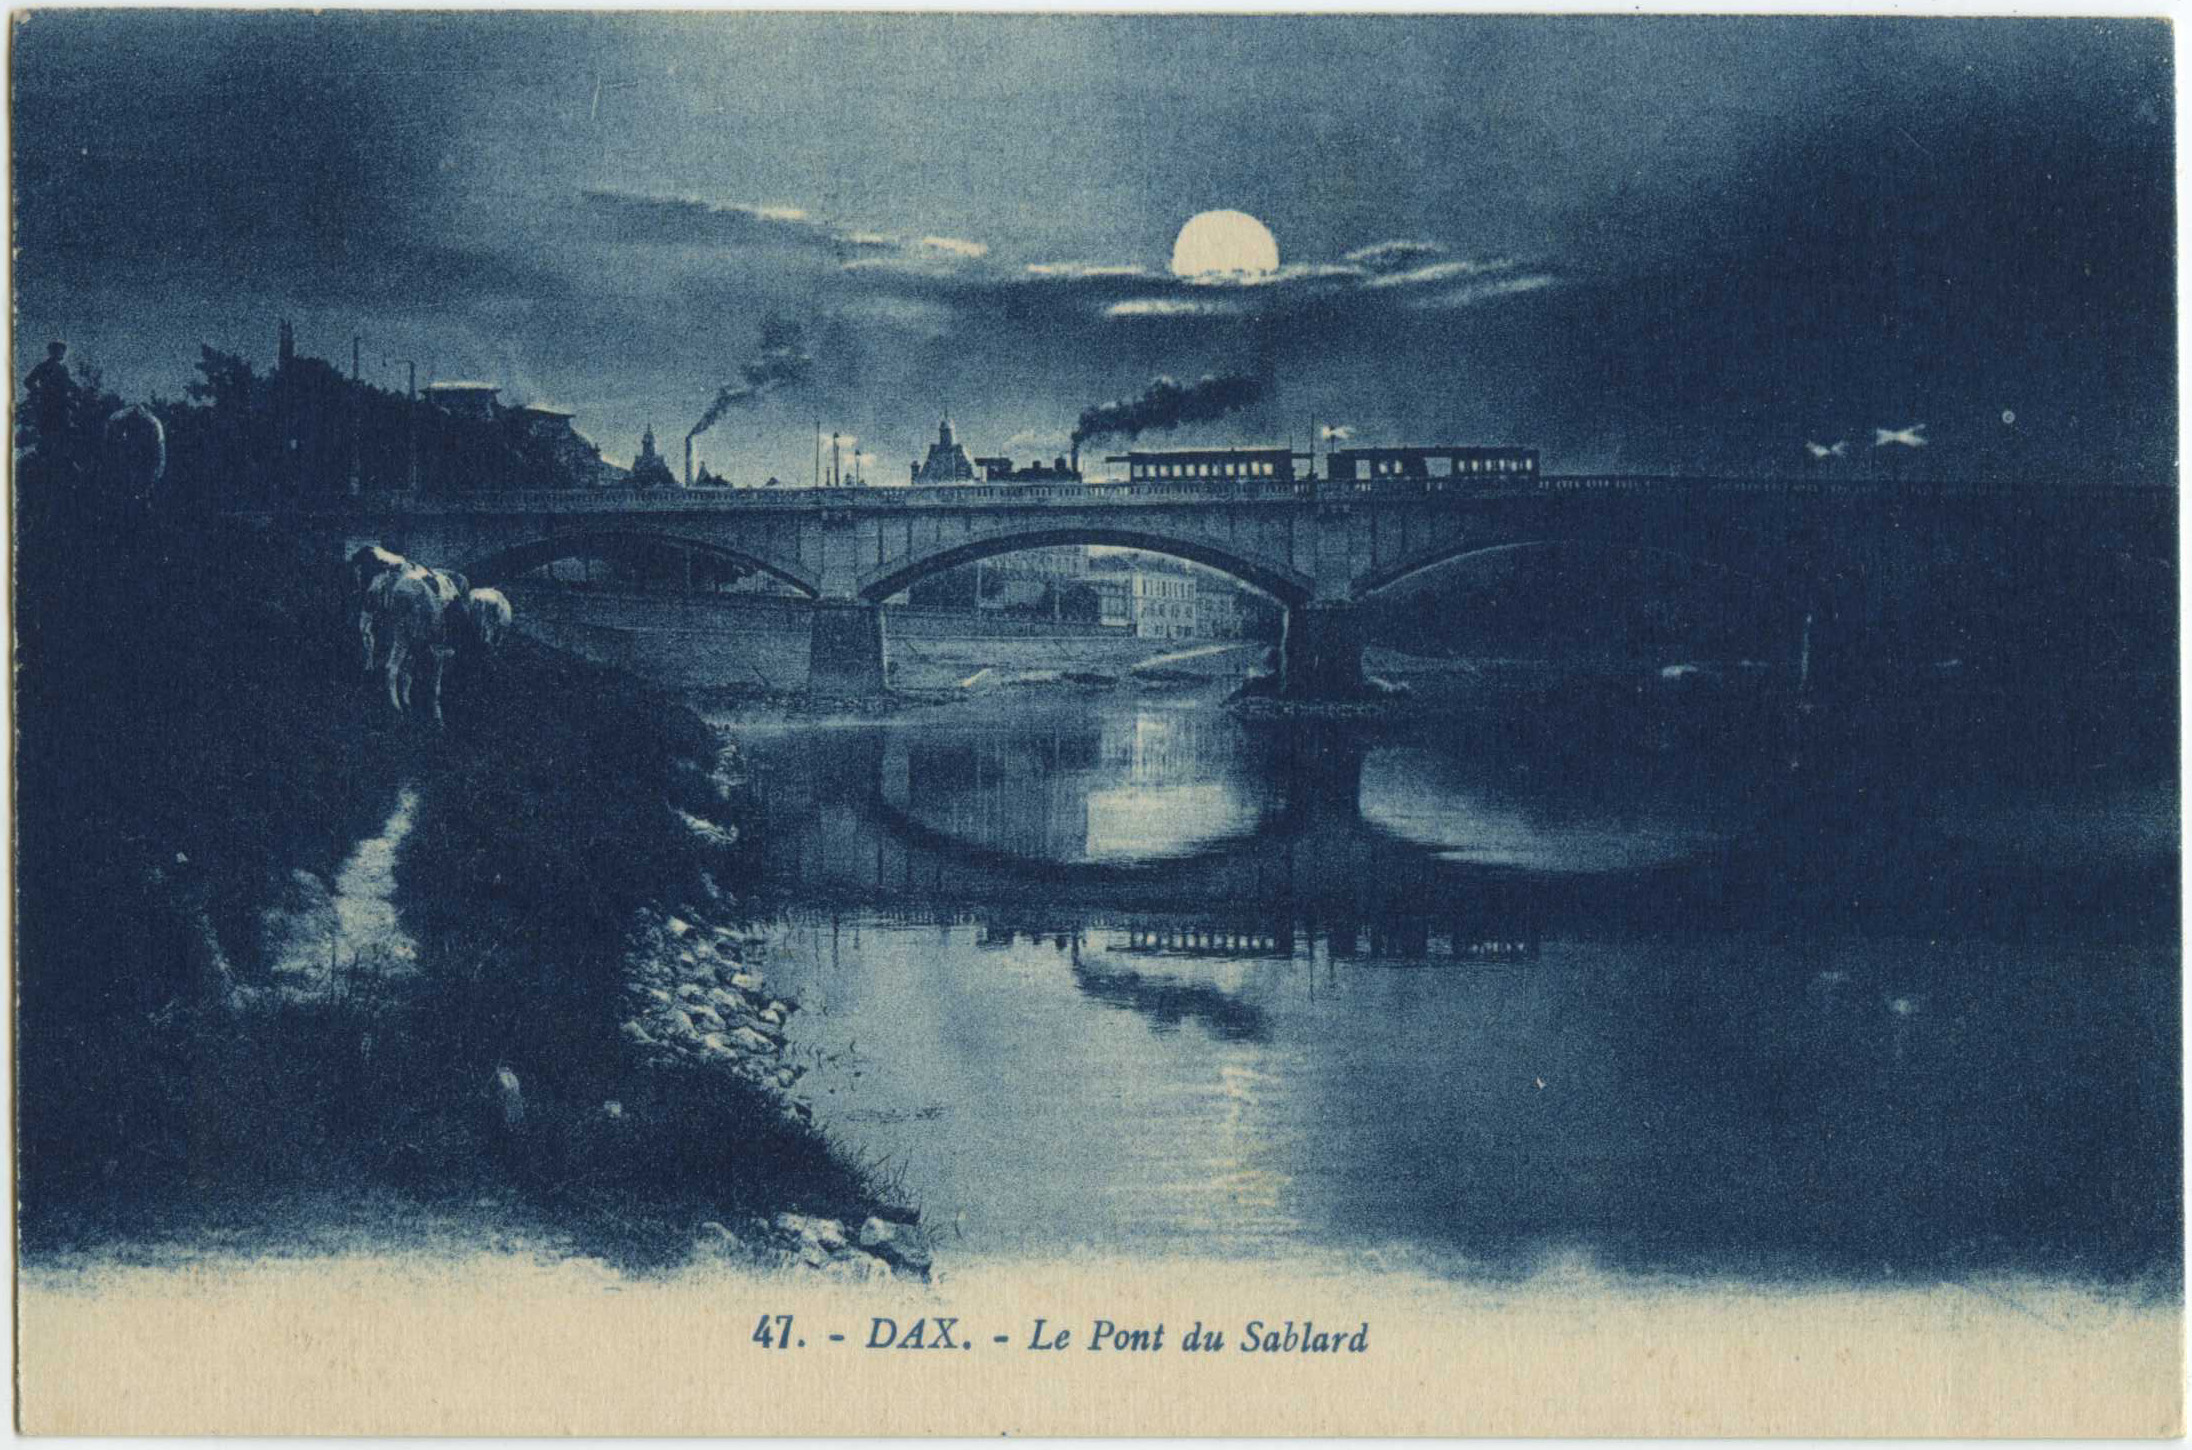 Dax - Le Pont du Sablard